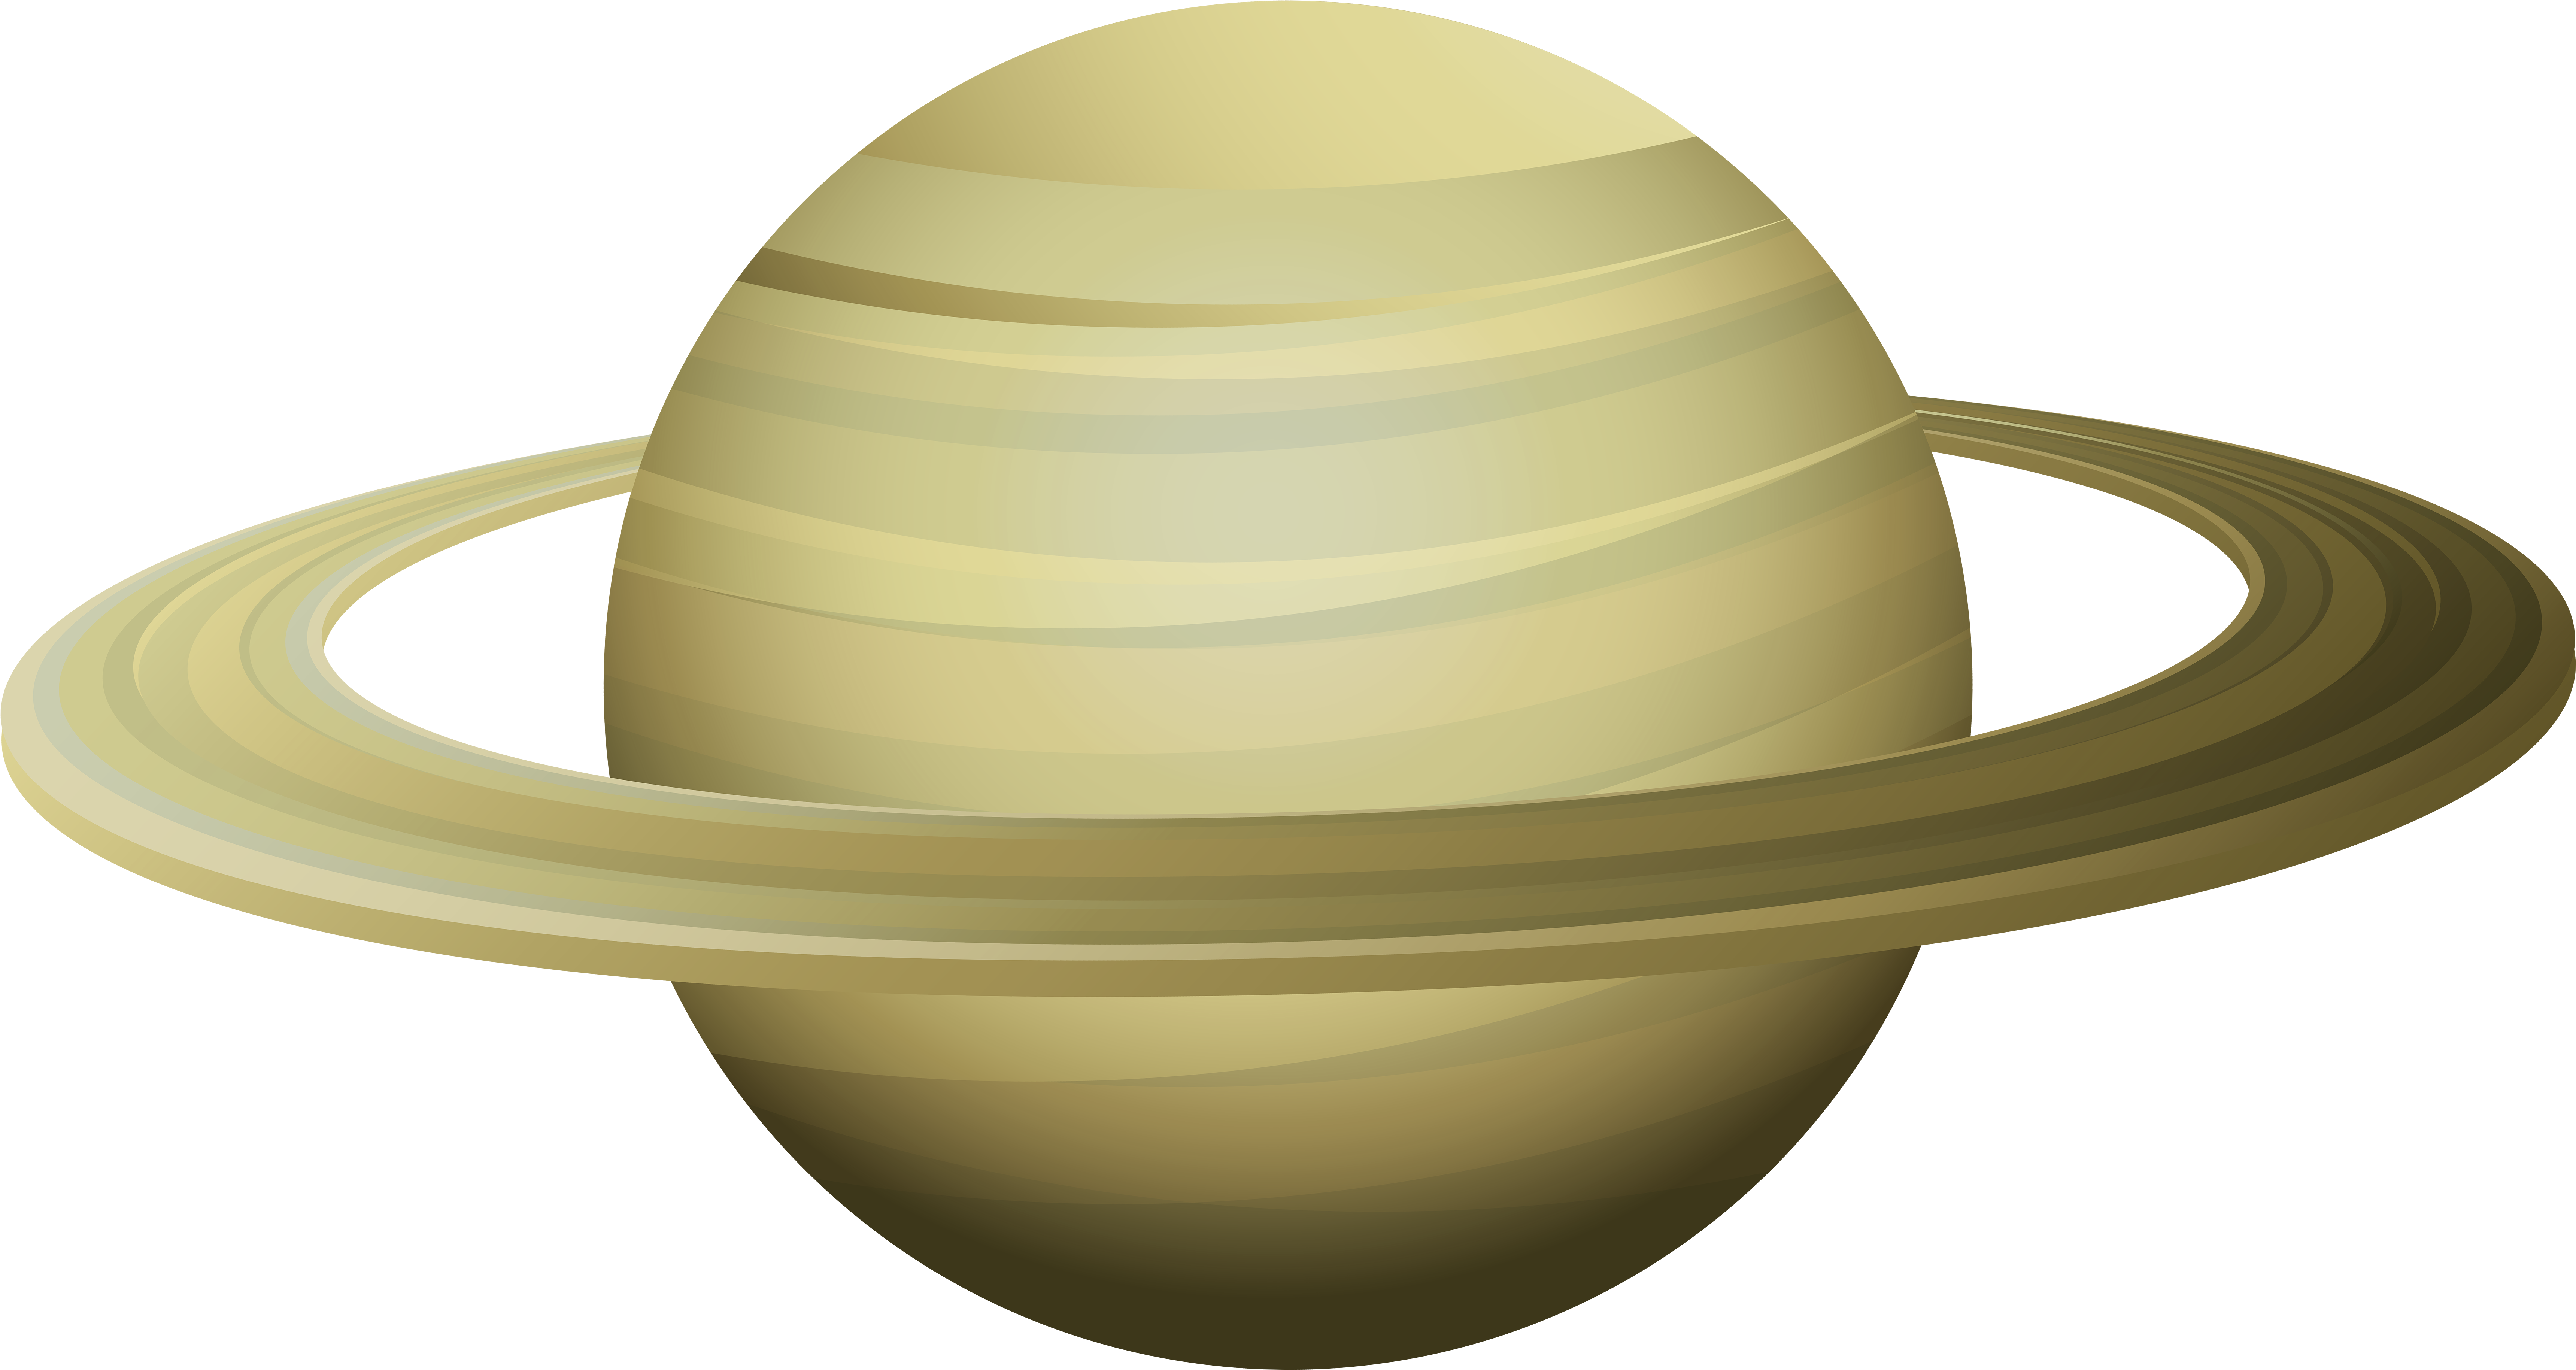 Планета сатурн картинка для детей. Сатурн (Планета). Планета Сатурн для детей. Планеты на белом фоне. Планета без фона.